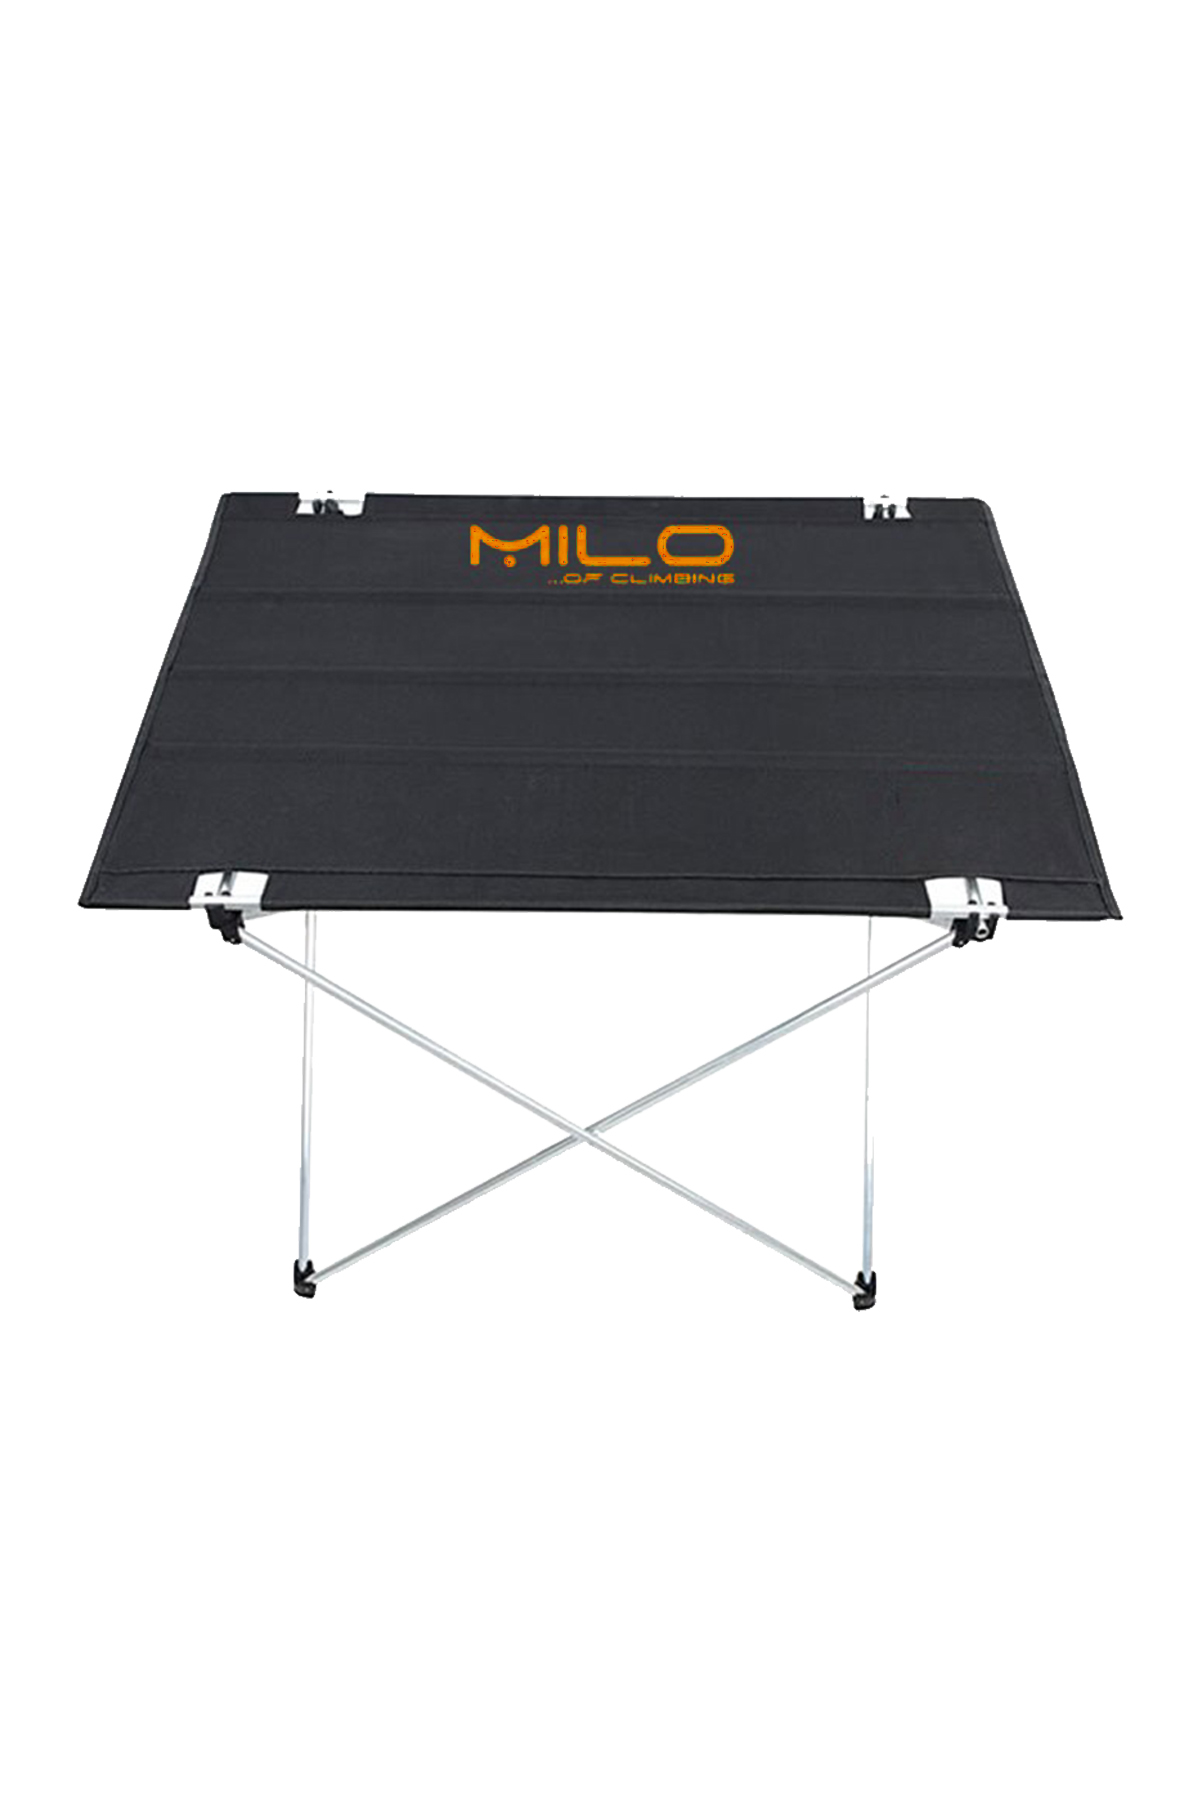 Milo L14112 - Lazy Turuncu Kamp Masası